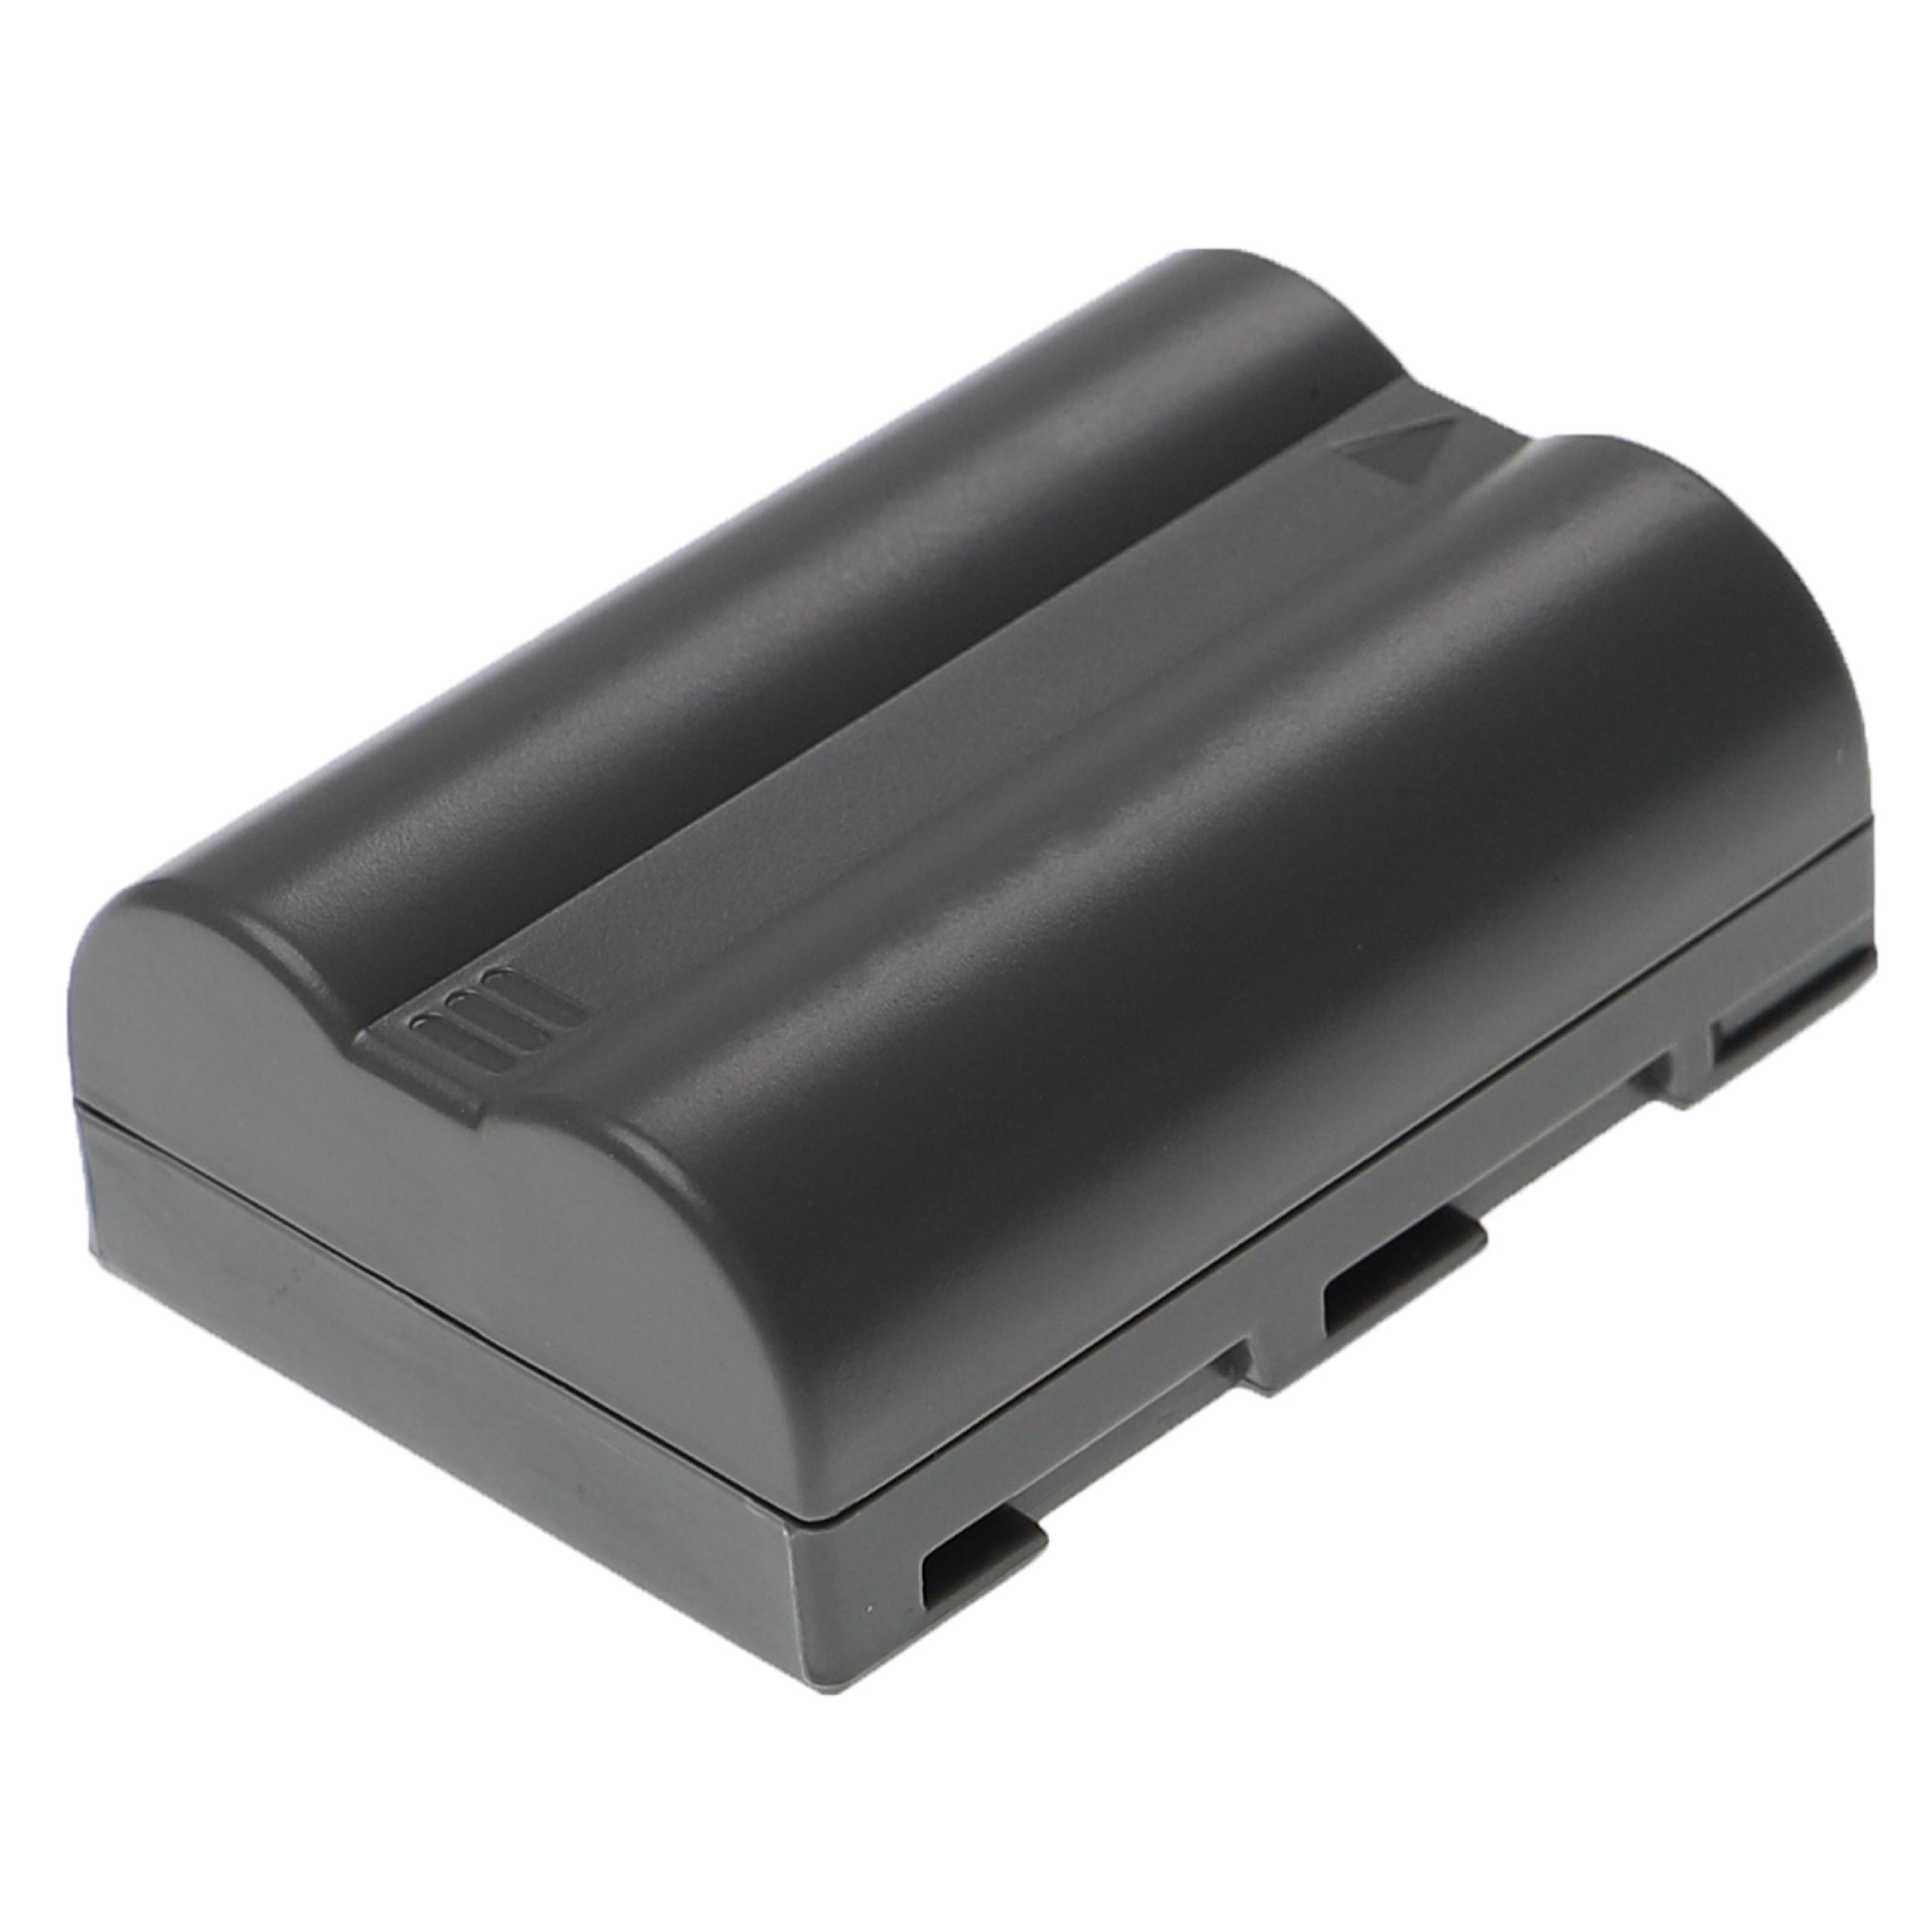 Batteria (2x pezzo) sostituisce Fujifilm BC-150, NP-150 per fotocamera Fujifilm - 1900mAh 7,4V Li-Ion